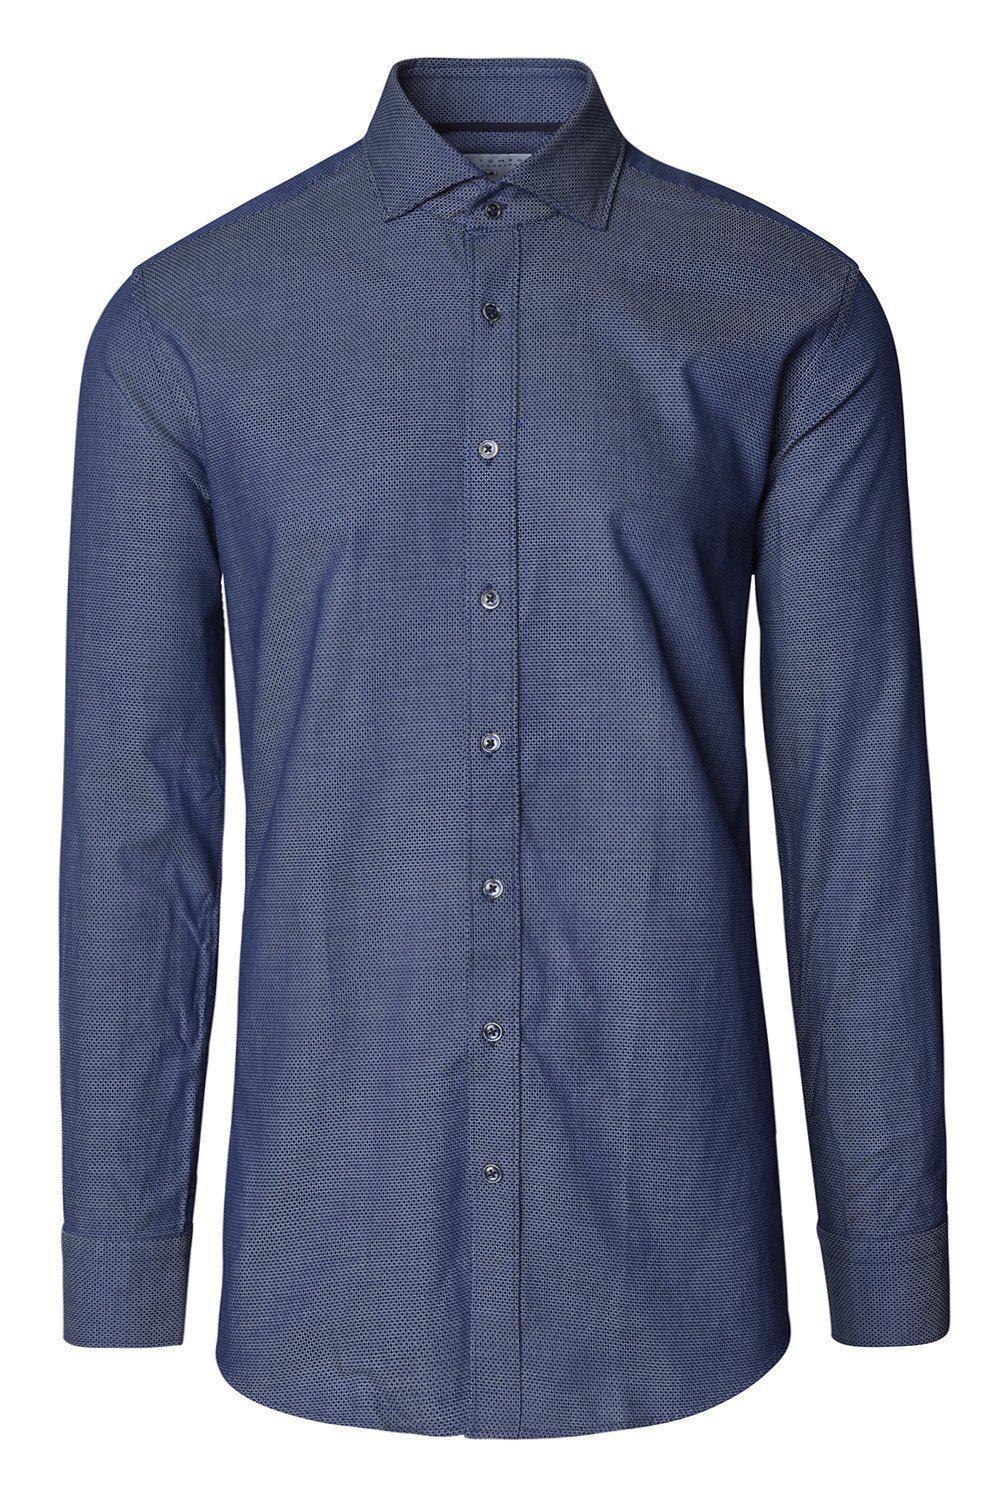 Jacquard Cotton Tonal Button Dress Shirt - Navy - Ron Tomson